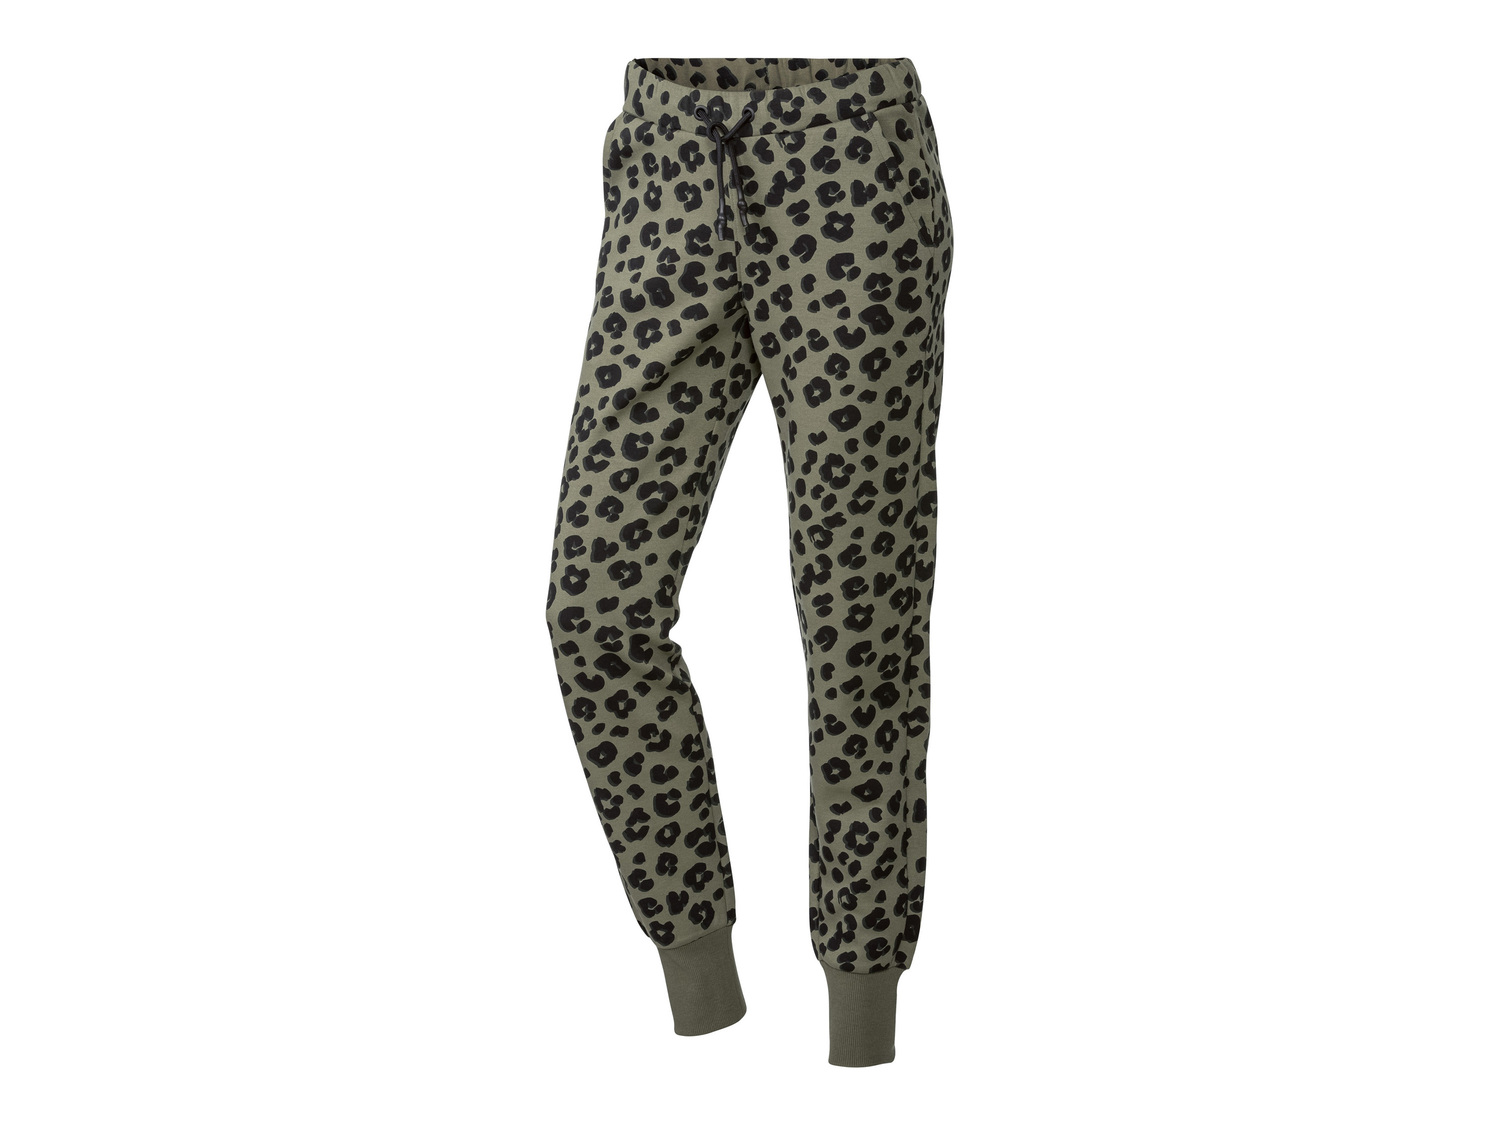 Pantaloni sportivi da donna Crivit, prezzo 9.99 &#8364; 
Misure: XS-L
Taglie ...